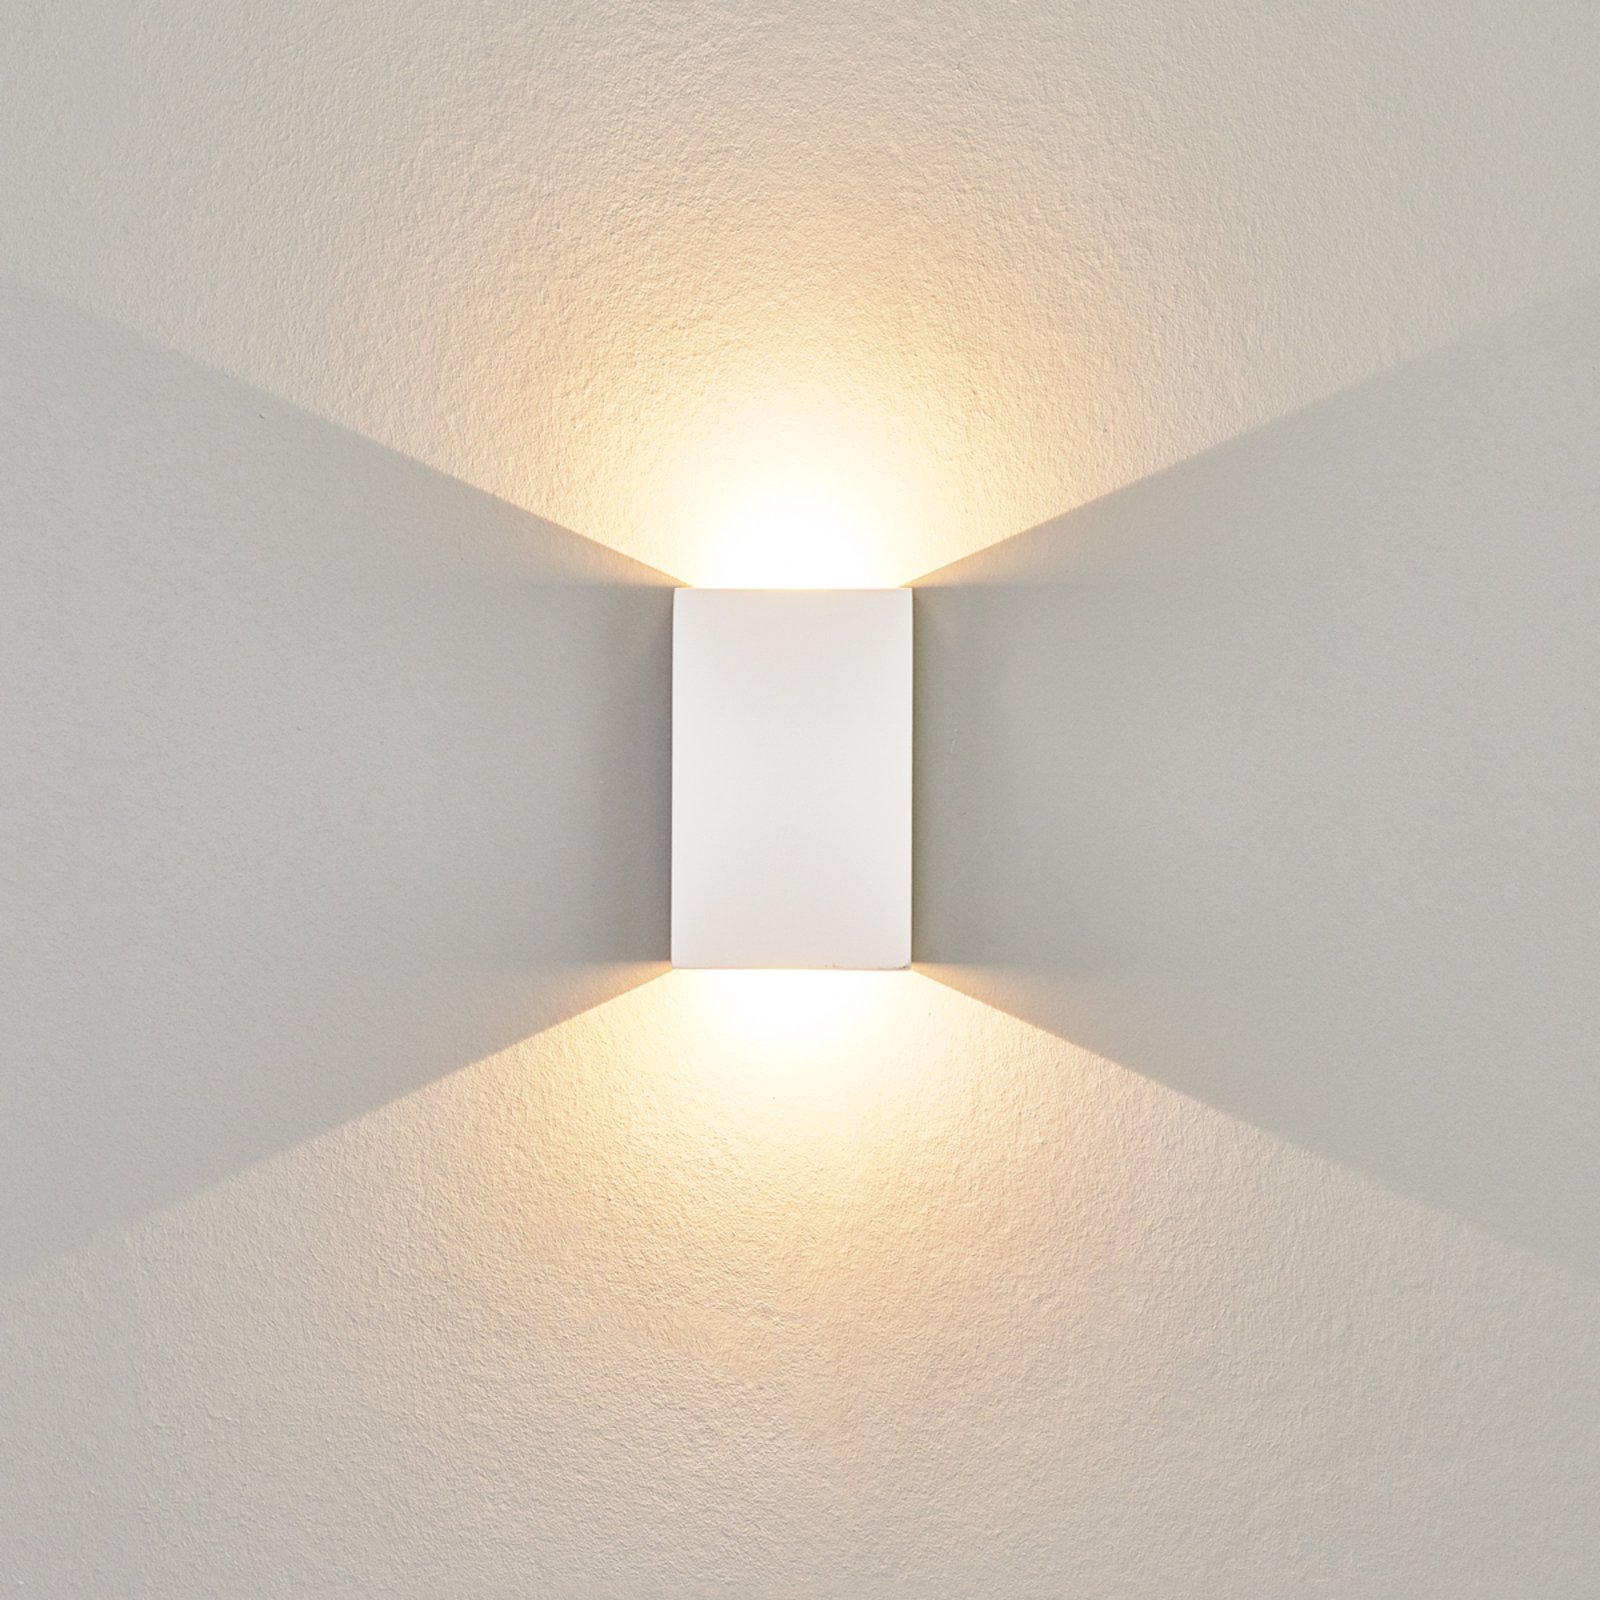 Nástenné LED svietidlo Fabiola zo sadry, 16 cm